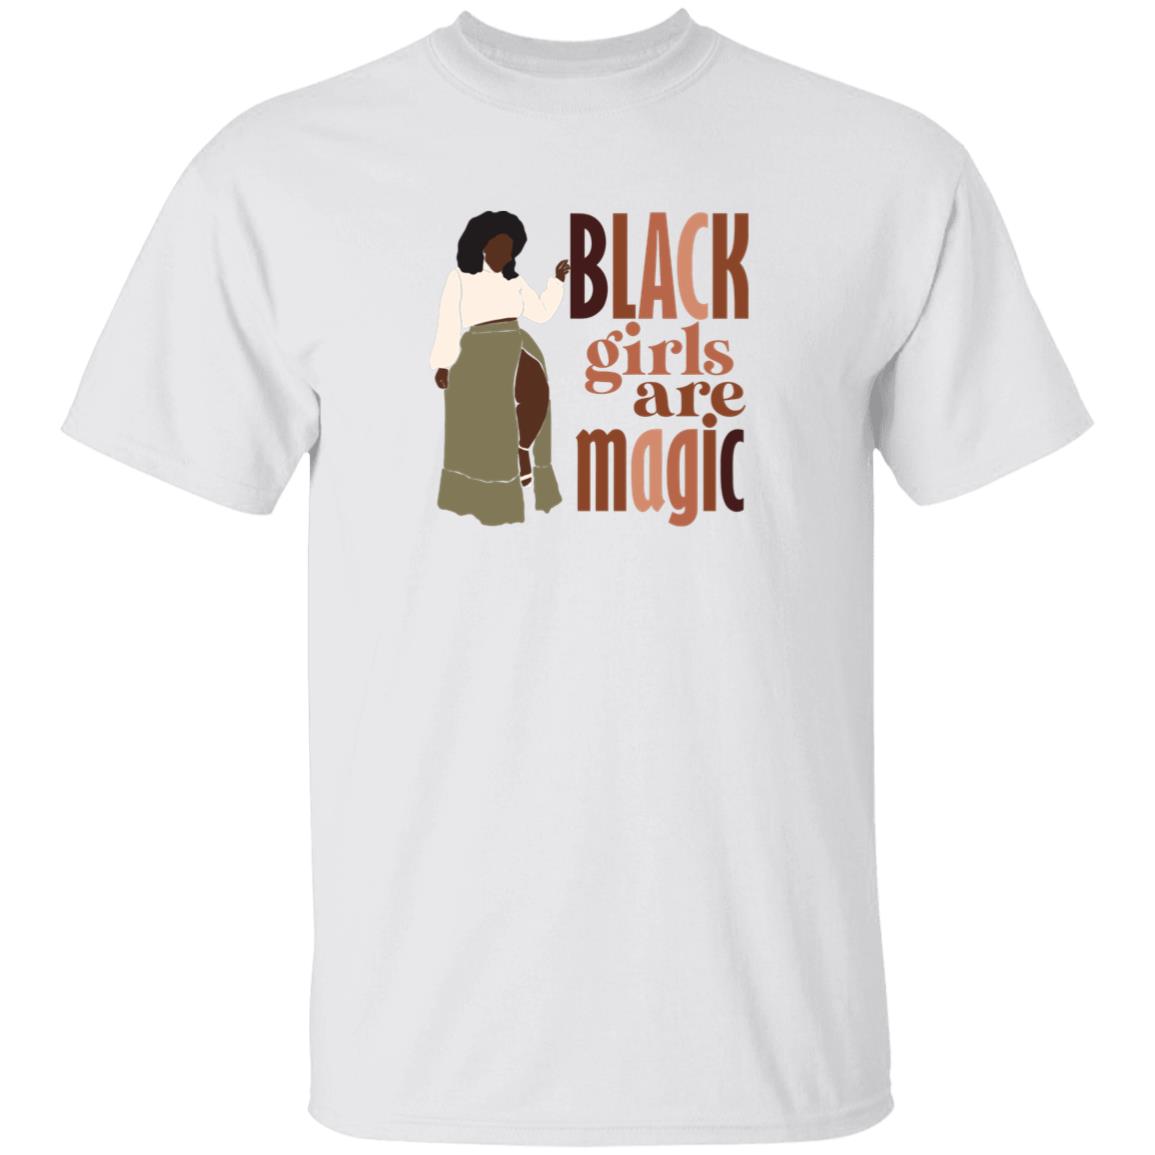 Black girls are magic (T-Shirt)